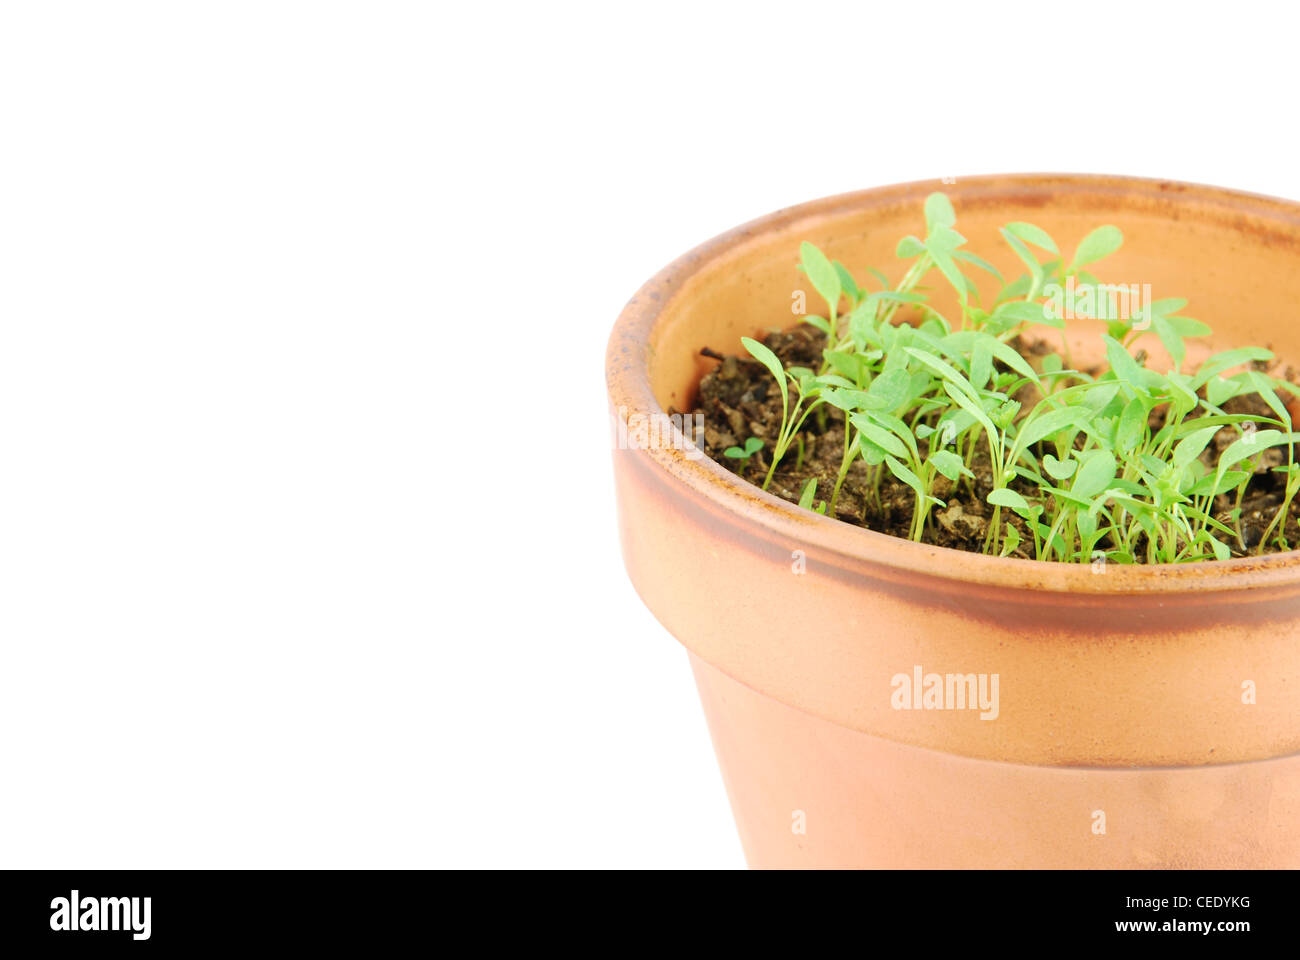 Parsley plant on a terracotta pot Stock Photo